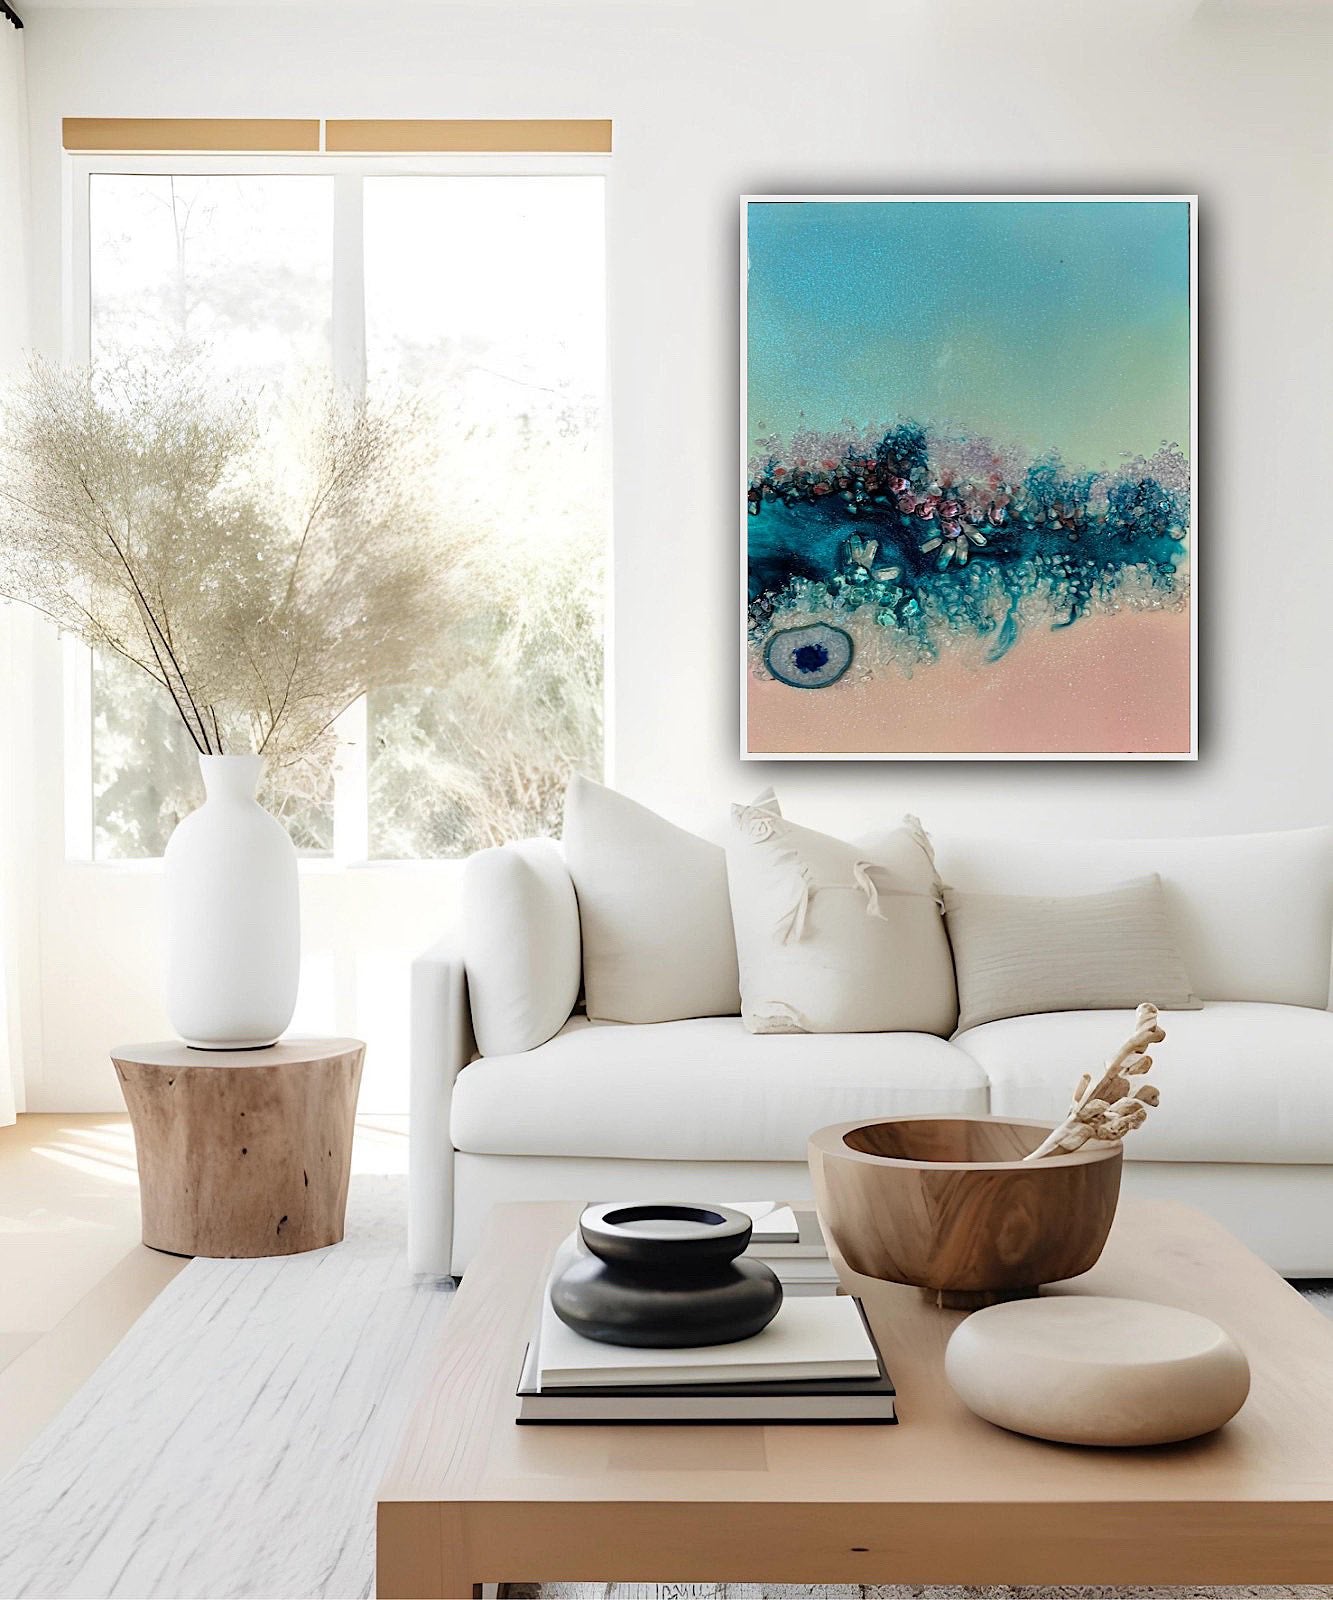 Heart Reef Bliss 2 with Swarovski, Amethyst, Agate, Quartz & Epoxy Glass on Canvas 40x50cm (Copy)